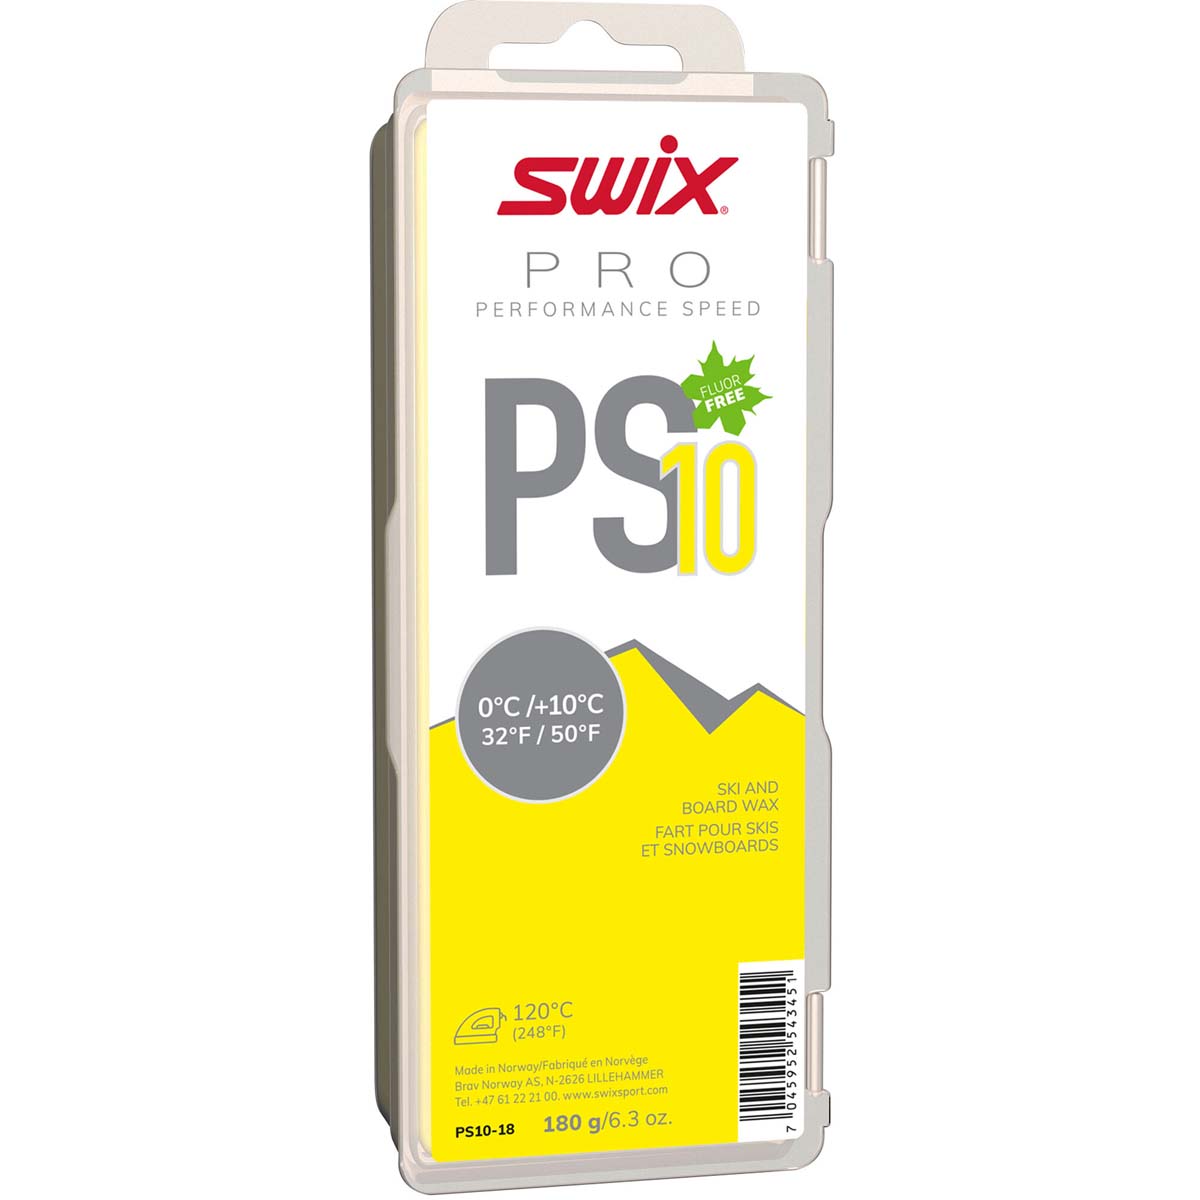 Skluzný vosk Swix Performance Speed, PS10 žlutý, 0/+10°C,180g